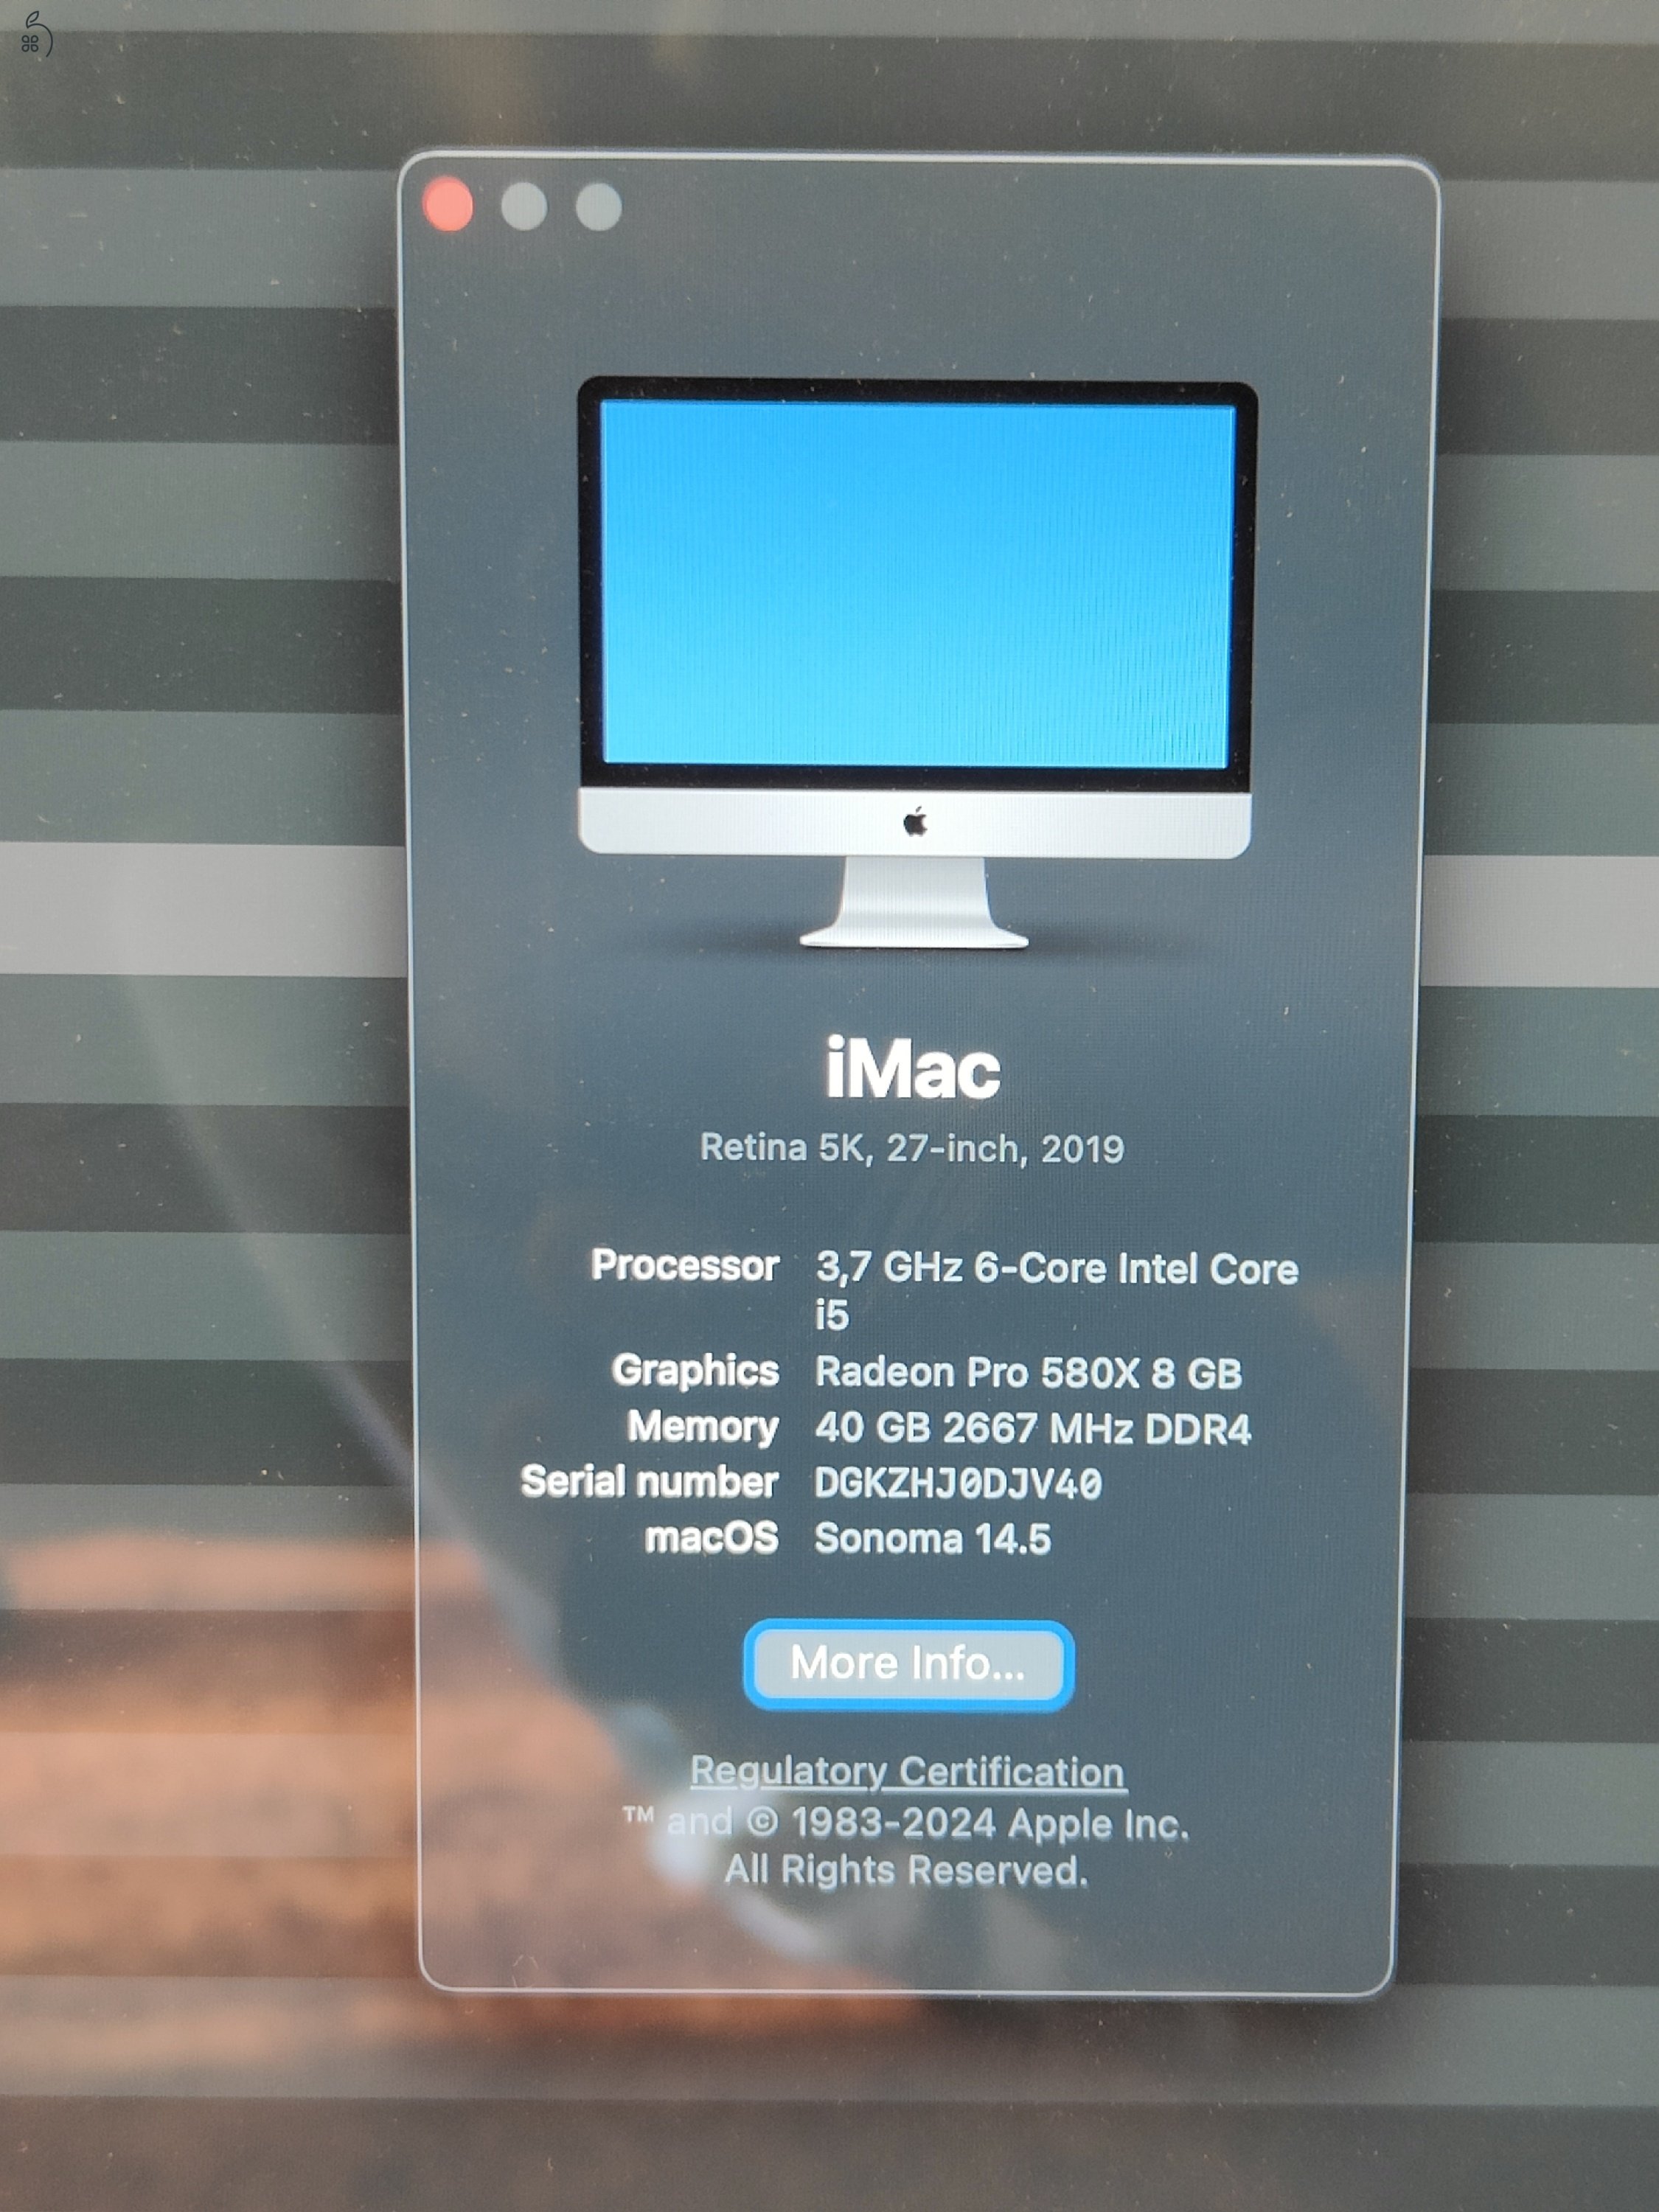 iMac 27